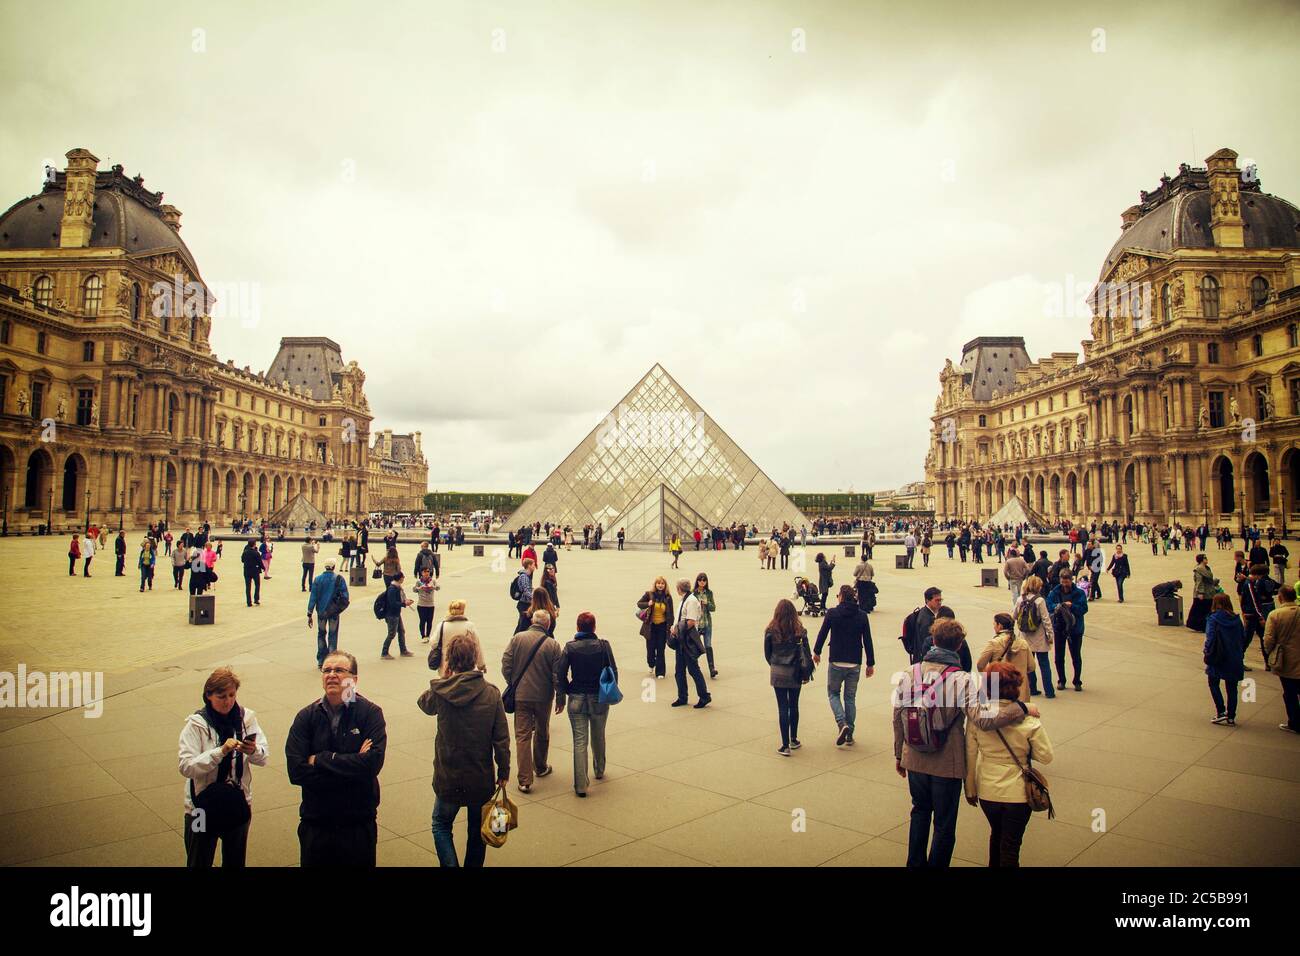 Die Fassade des Louvre Museums in Paris, 1. Frankreich. Stockfoto